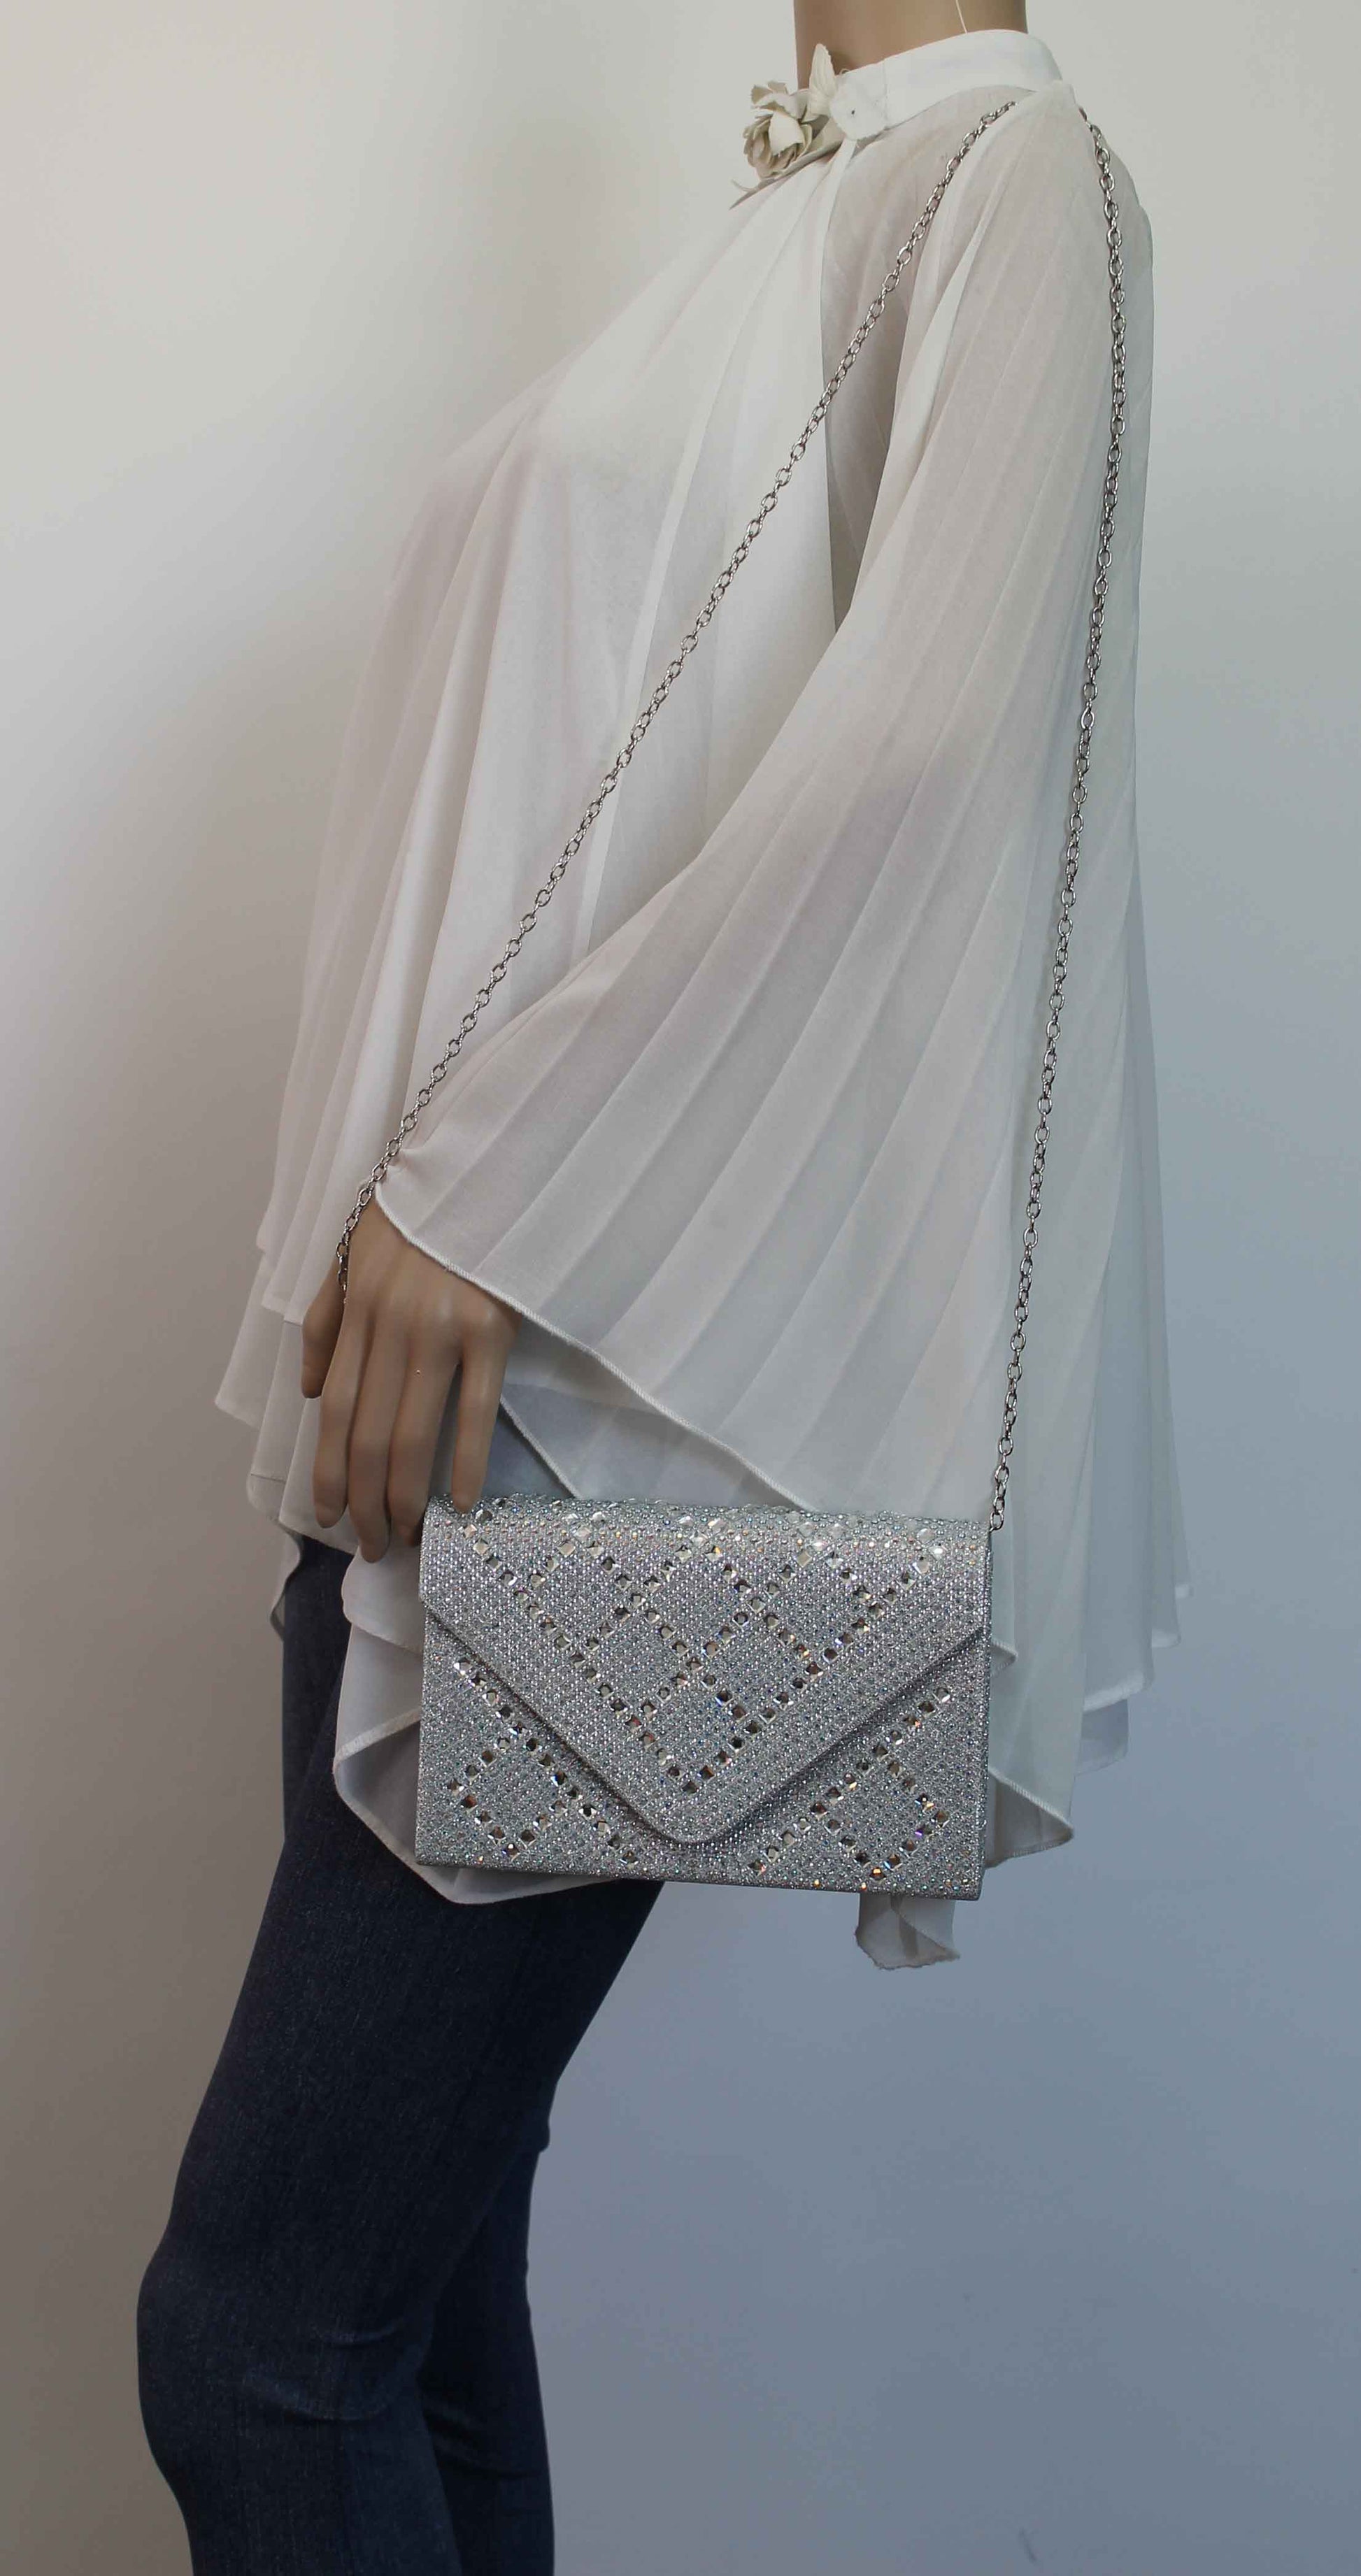 SWANKYSWANS Bethany Diamante Clutch Bag Silver Cute Cheap Clutch Bag For Weddings School and Work